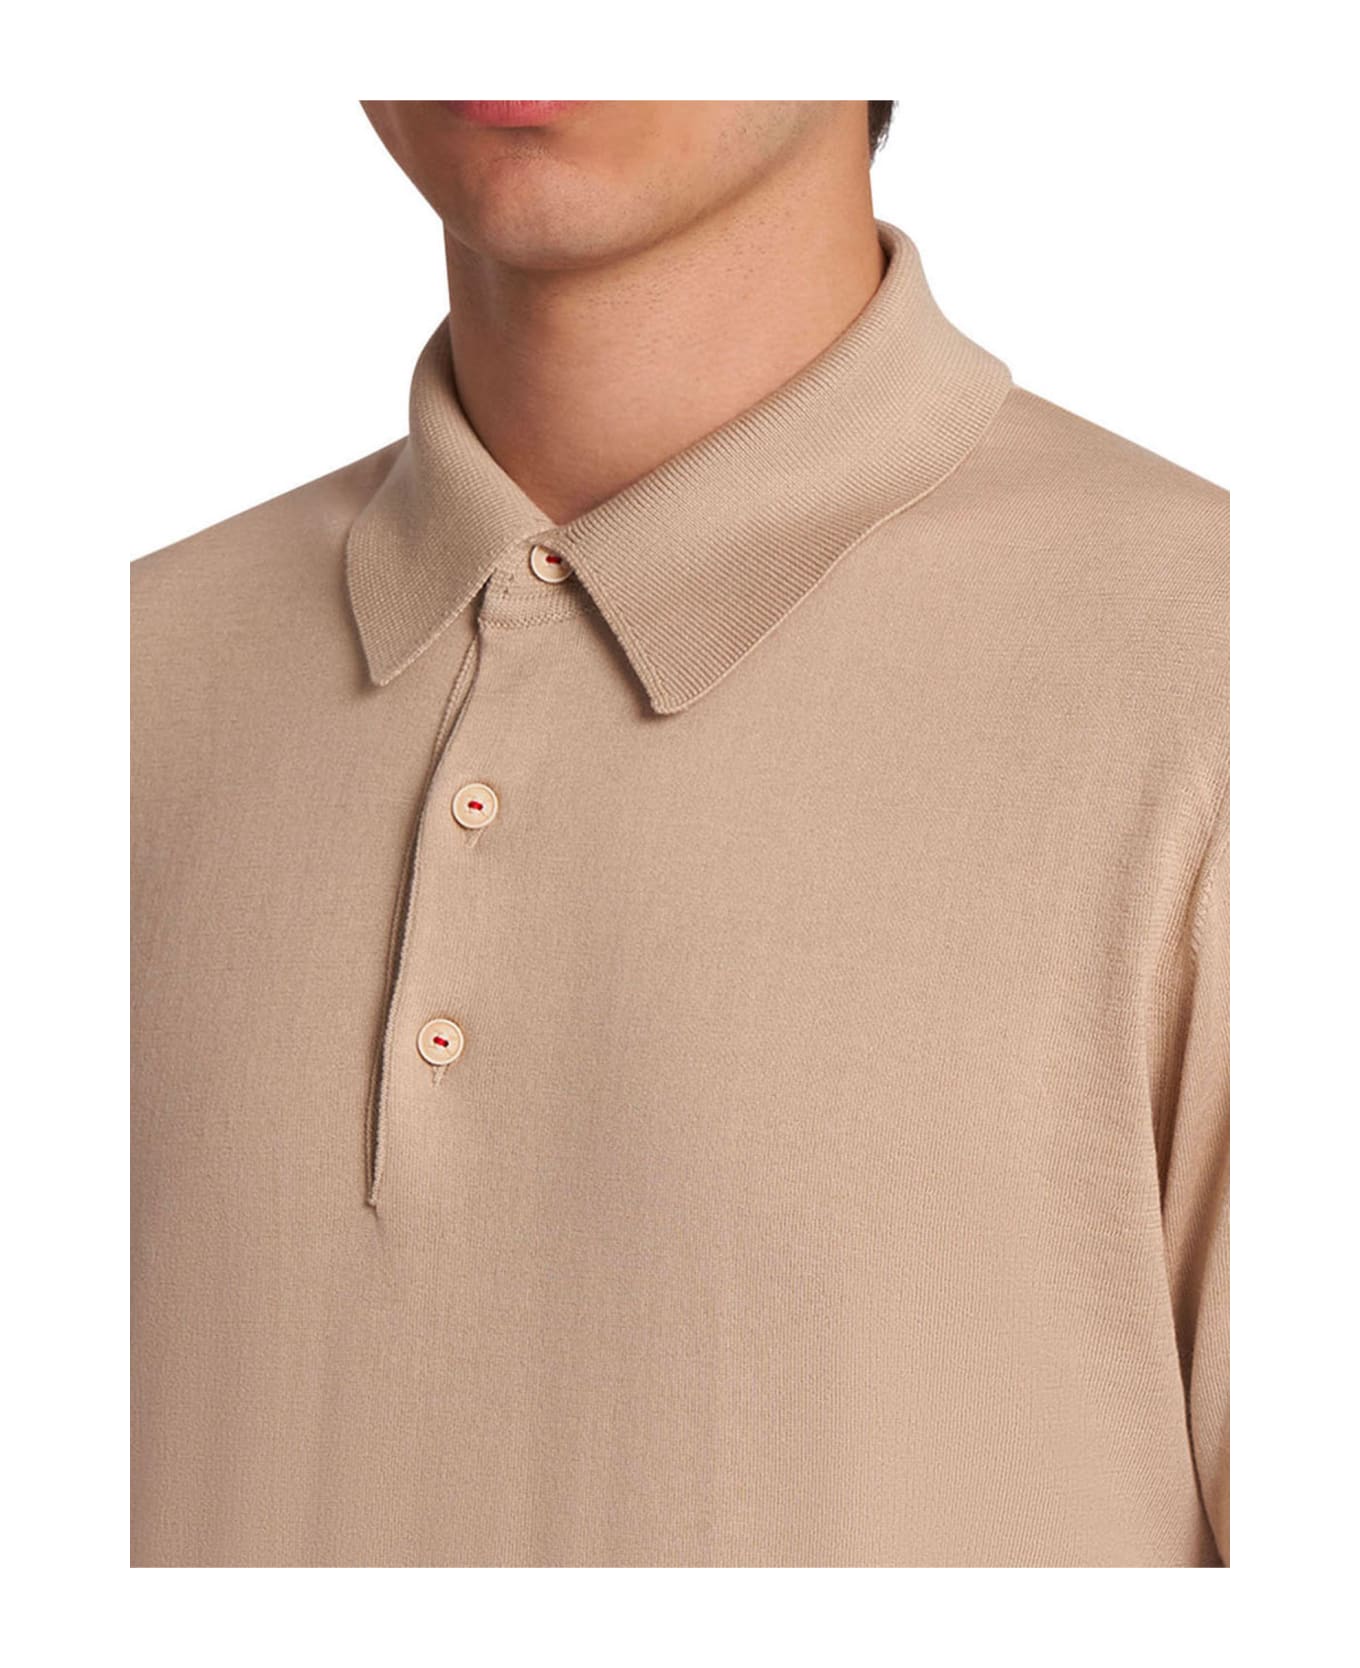 Kiton Polo Shirt Cotton - NATURAL BEIGE